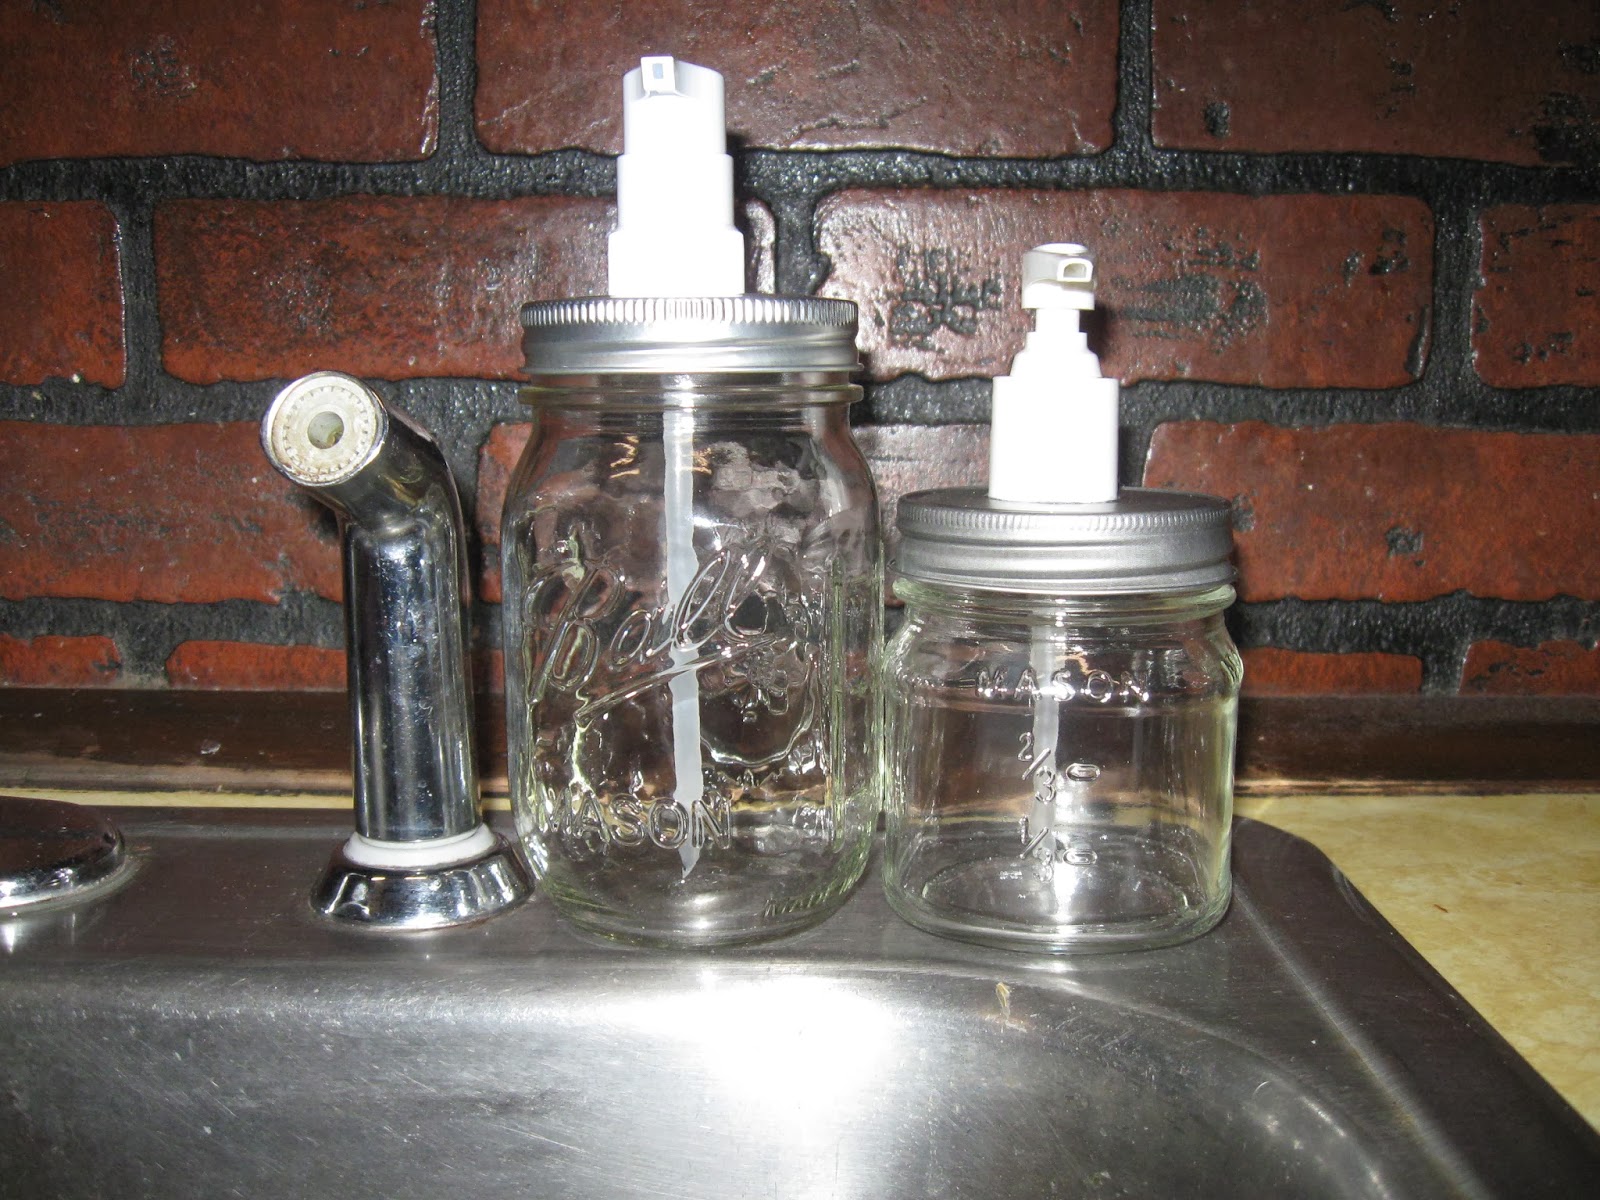 https://www.etsy.com/listing/173611153/ball-mason-jar-soap-or-lotion-dispenser?ref=shop_home_active_16